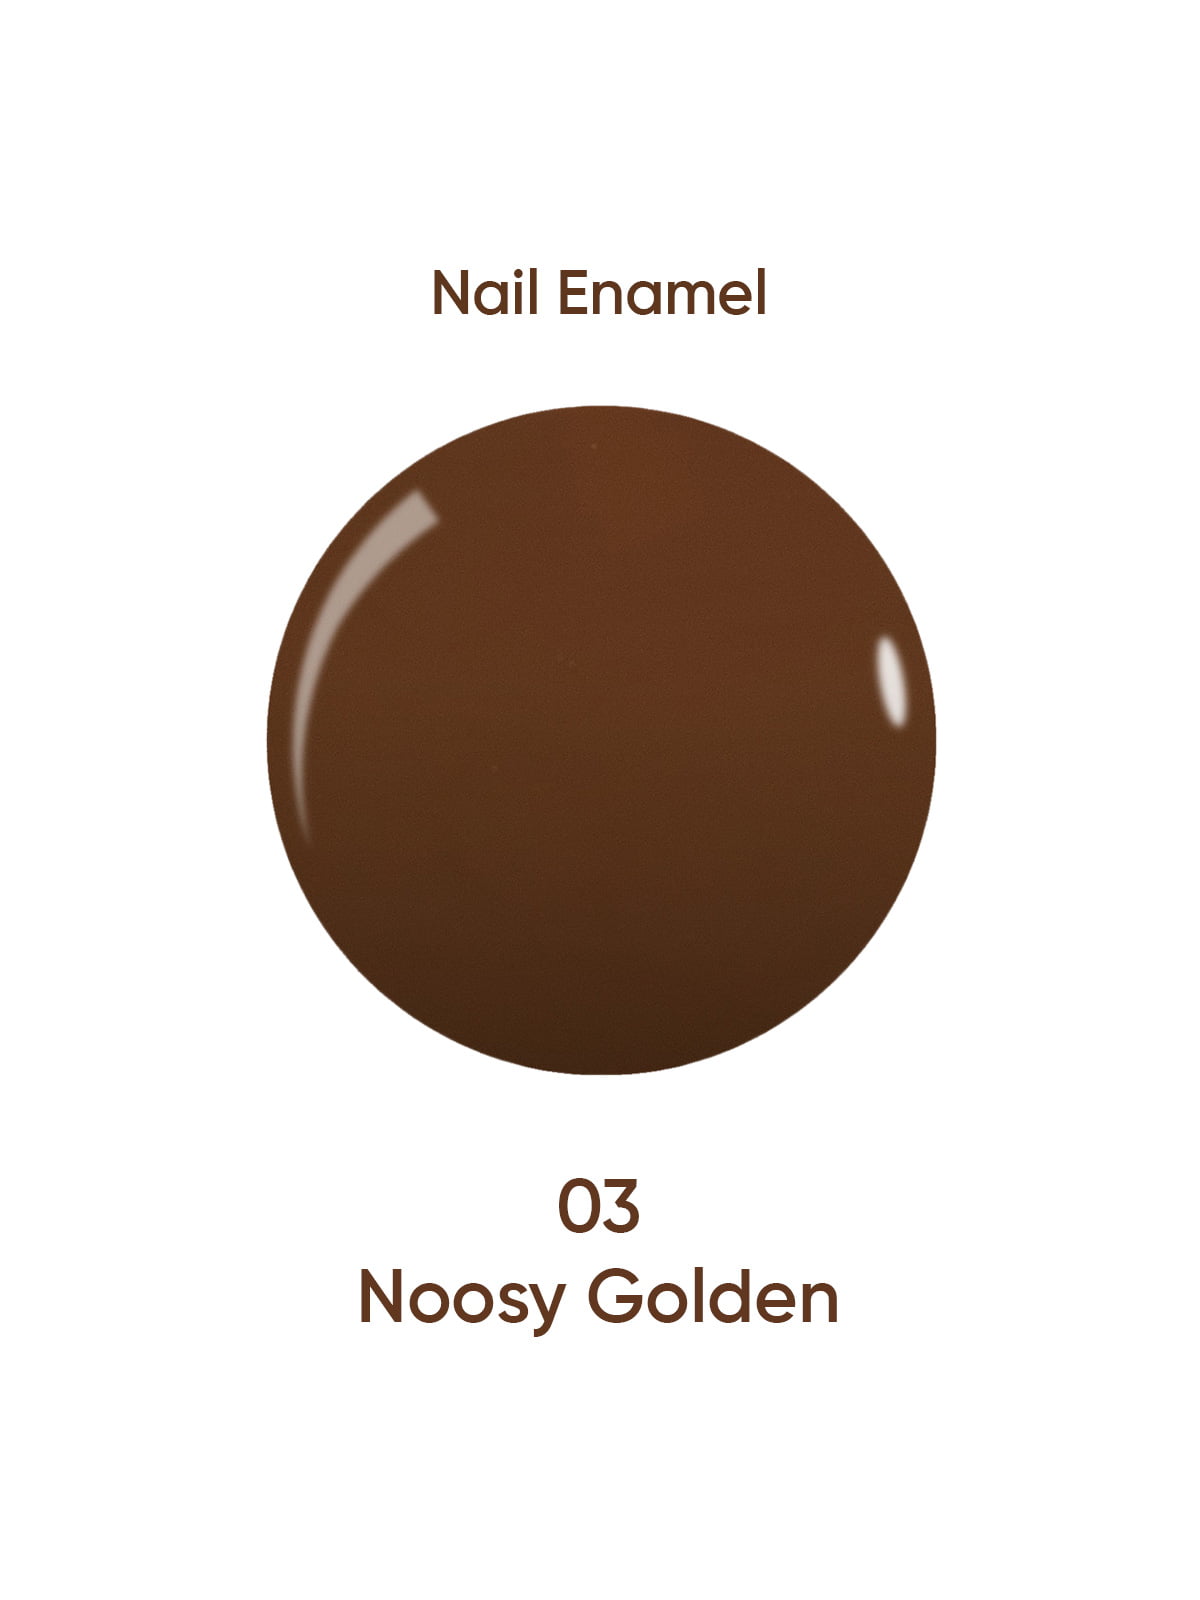 Nail Enamel 03 Noosy Golden